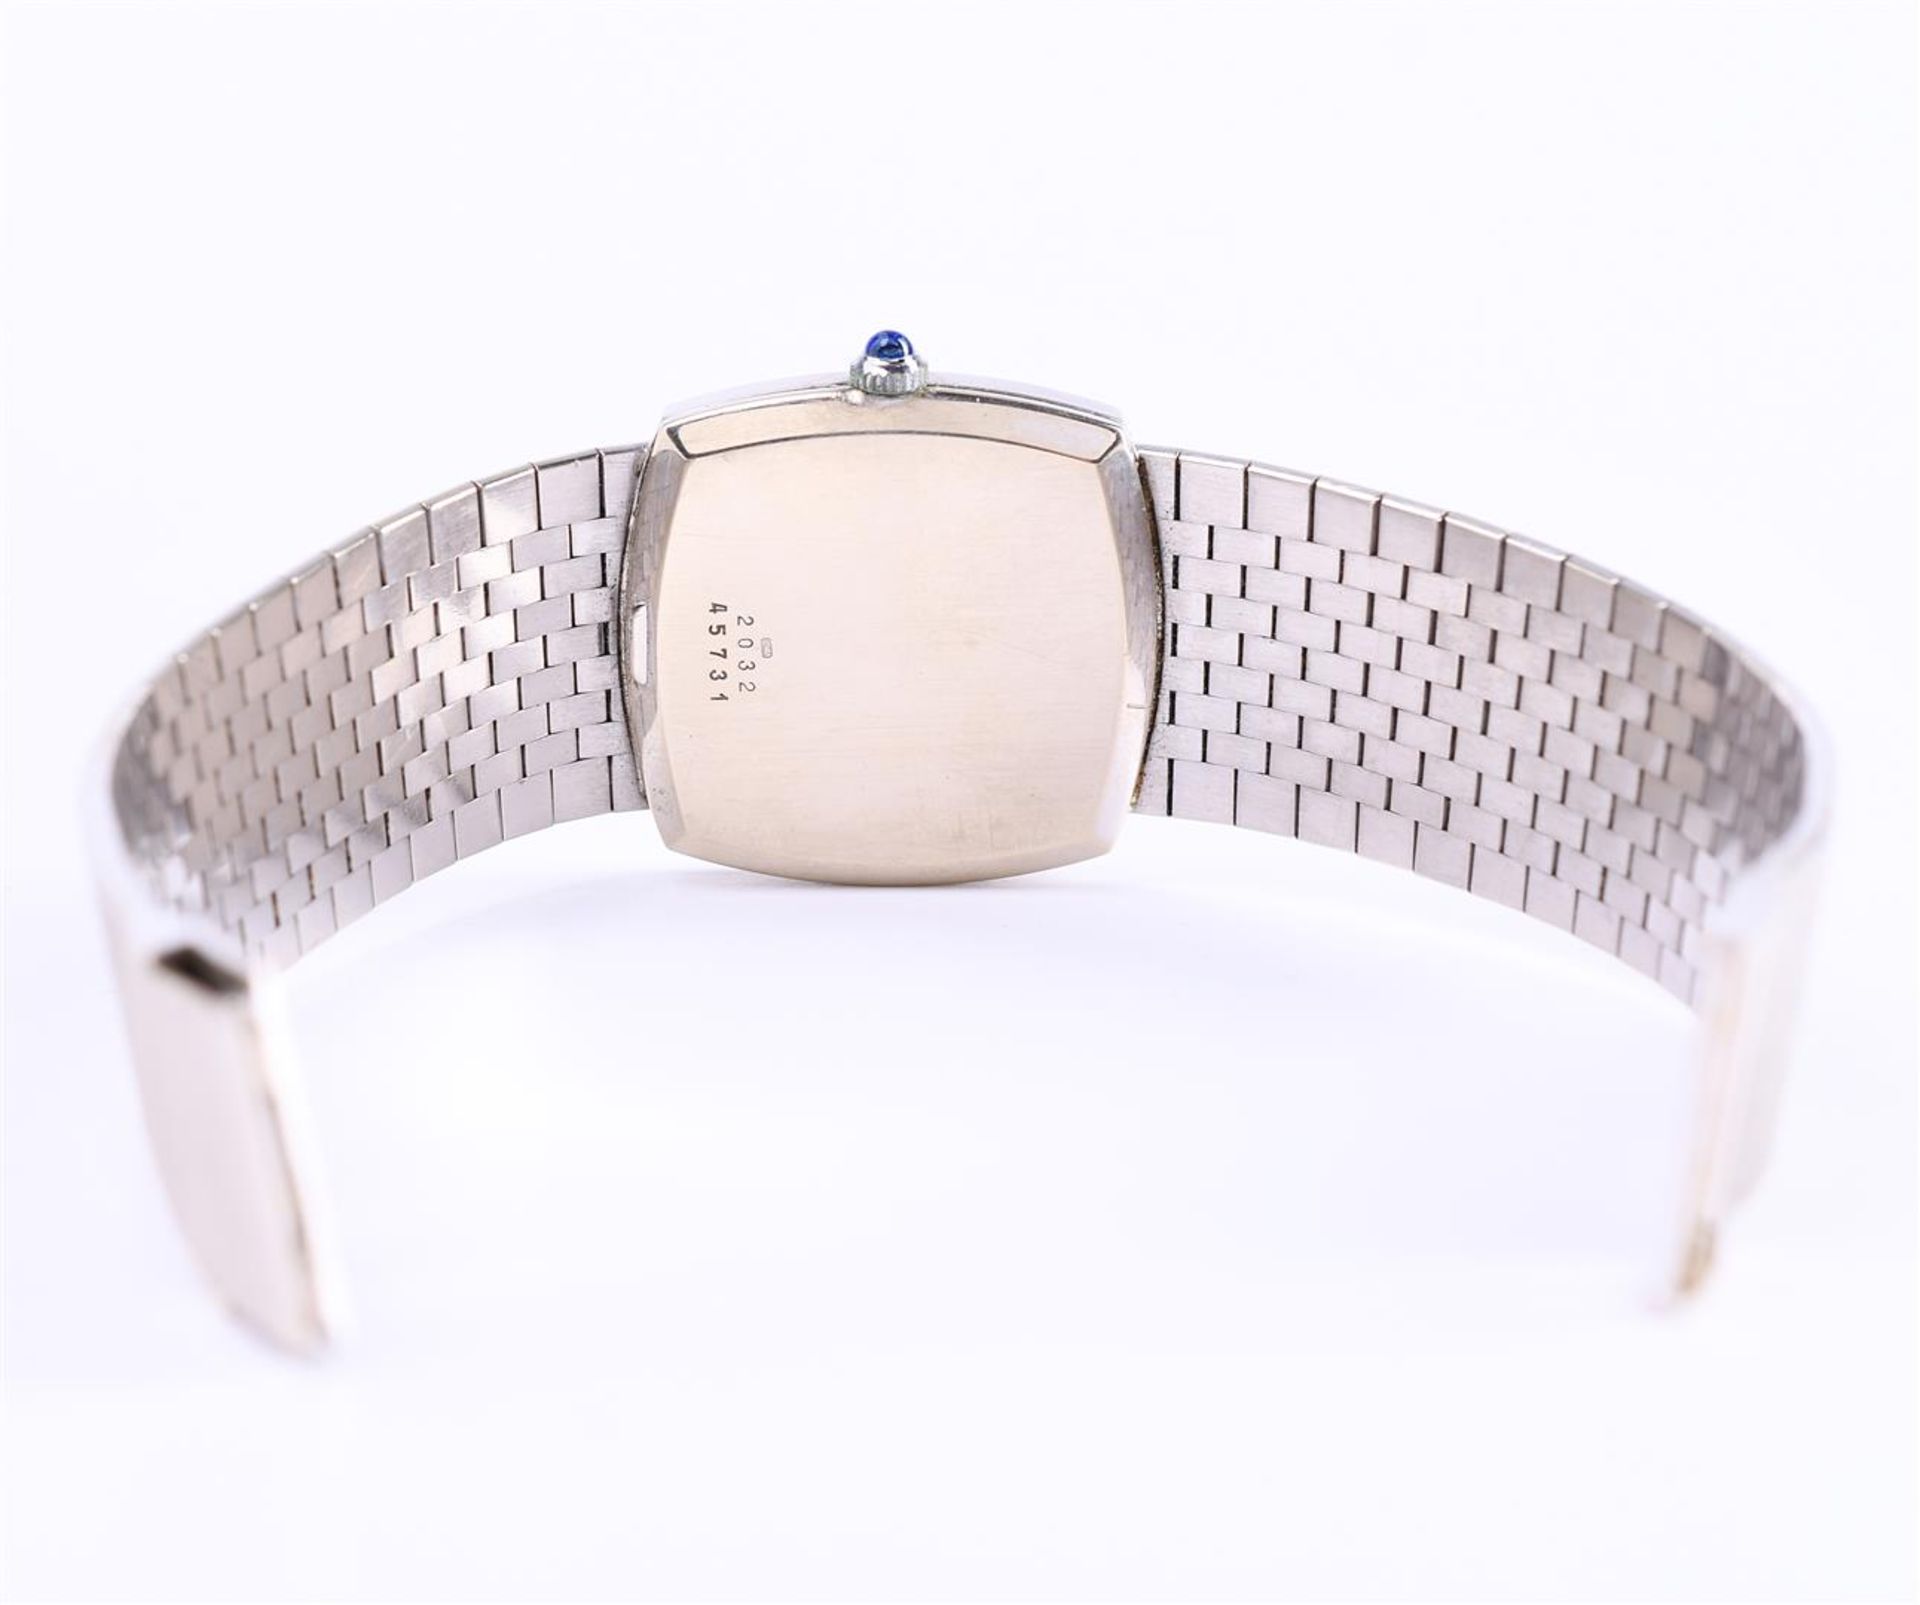 Chopard men's wristwatch Automatic 2052, 18k white gold, approximately 125 grams - Bild 5 aus 7